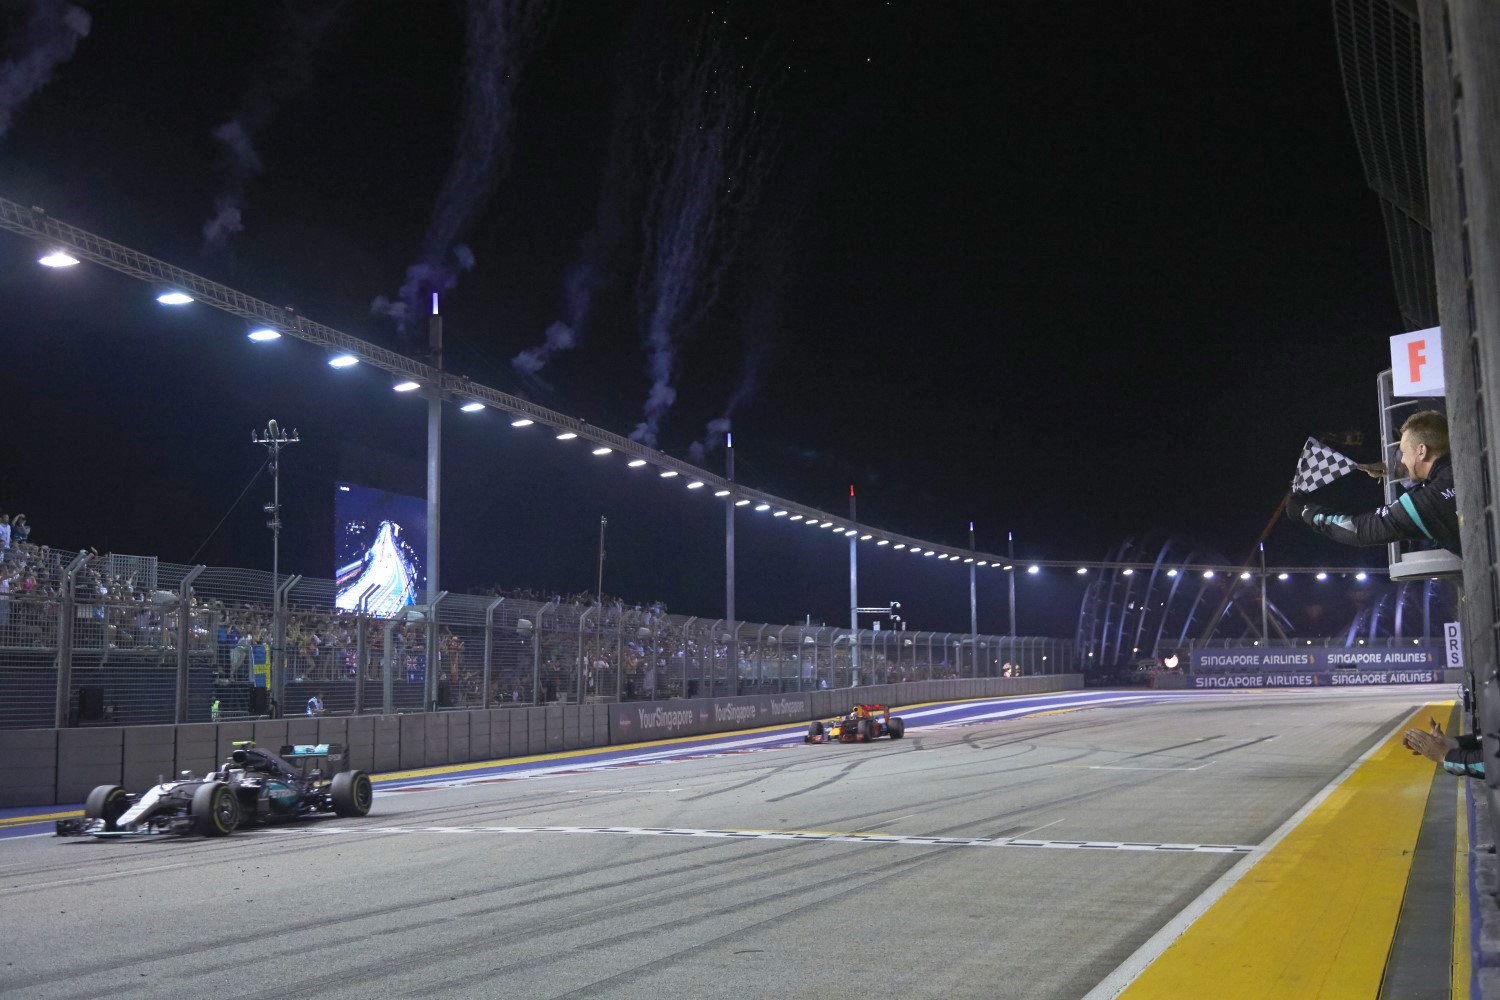 Margin at finish - Rosberg over Ricciardo